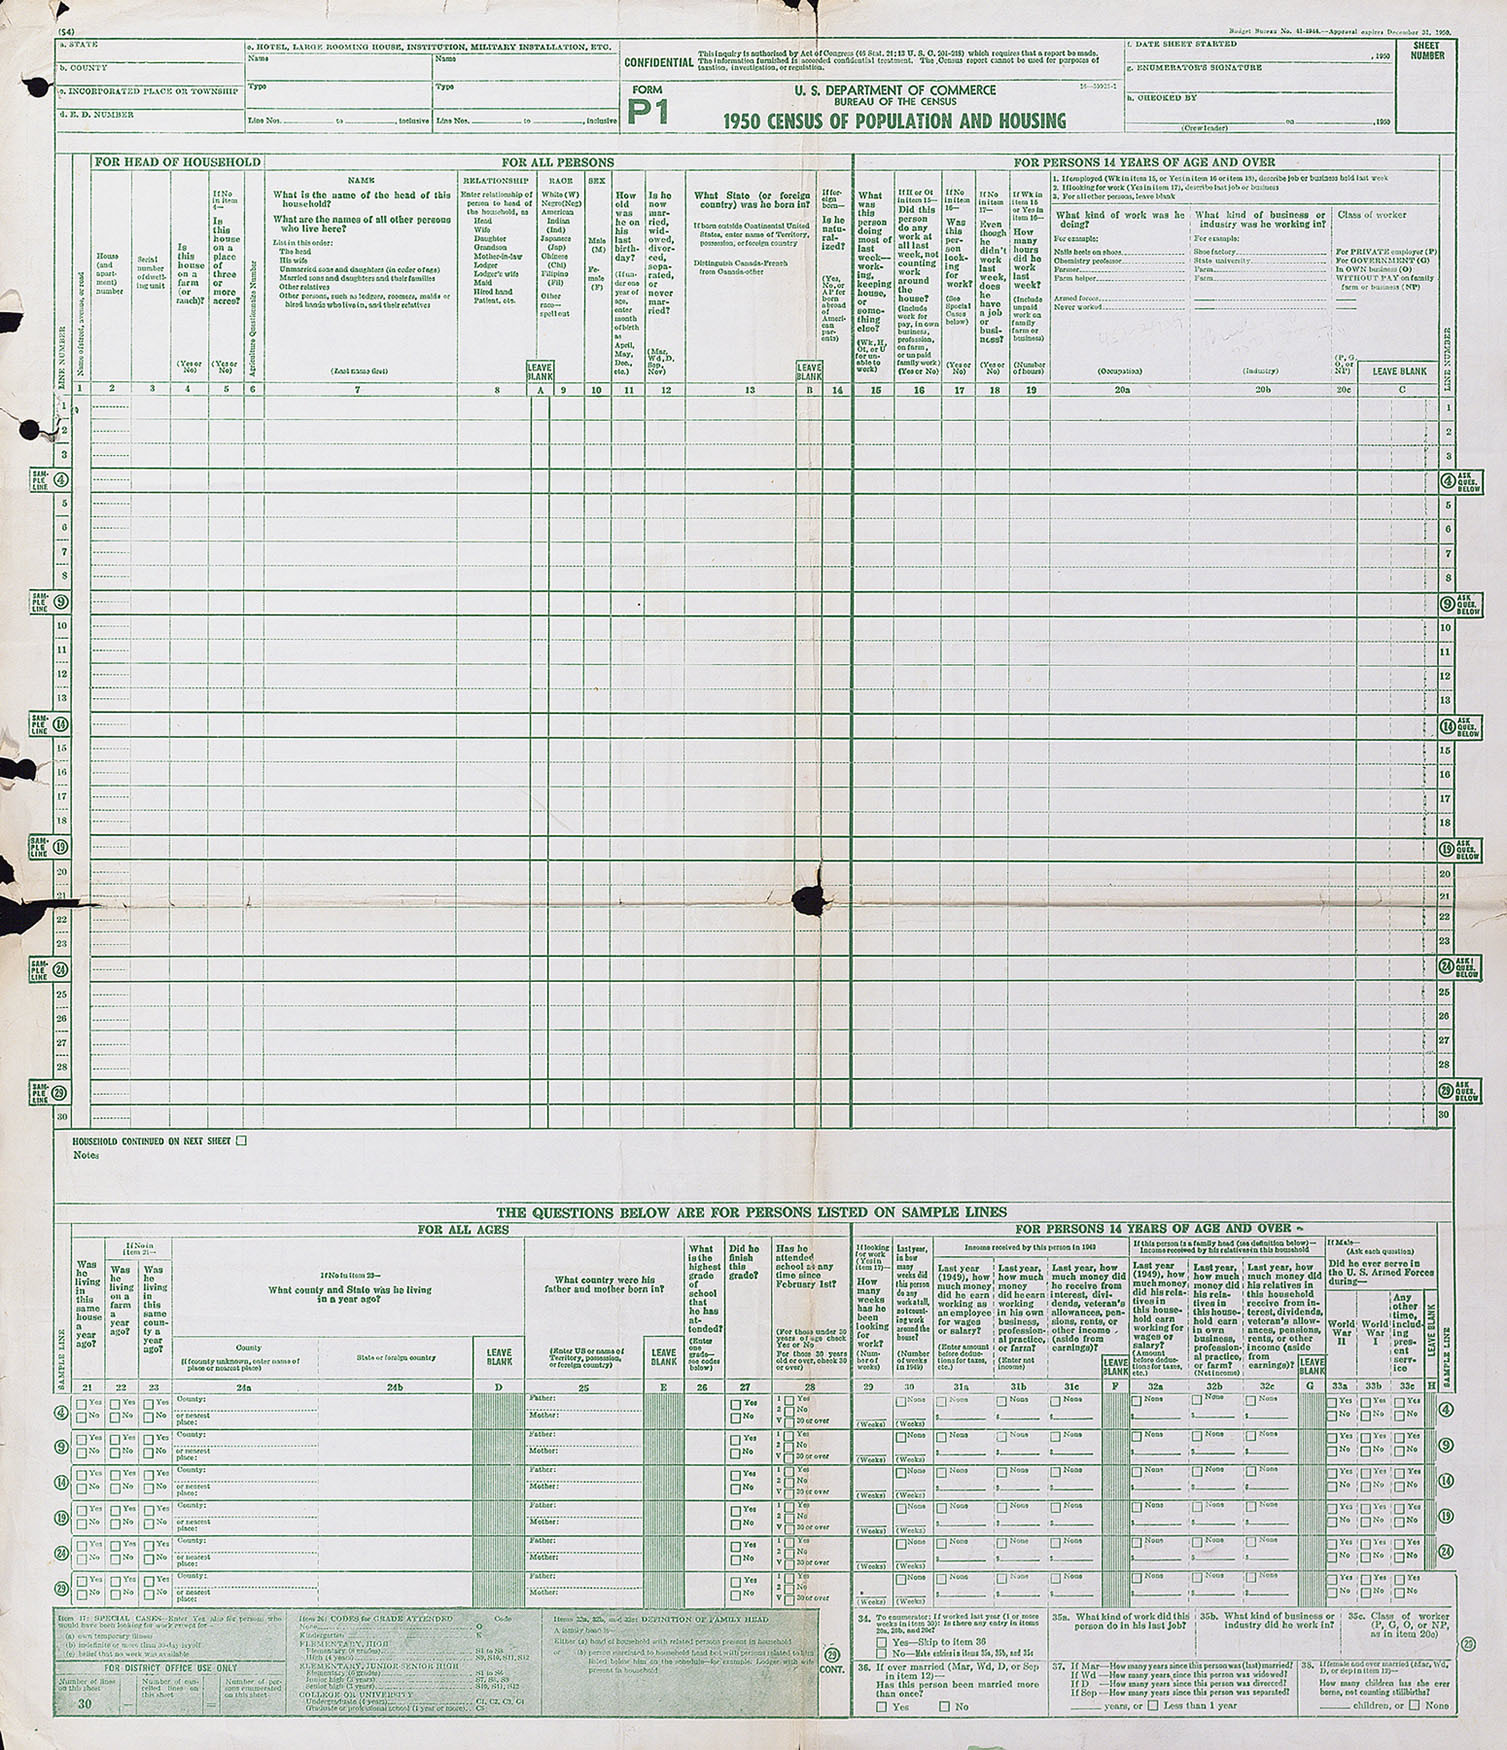 1950 Census Enumeration Form